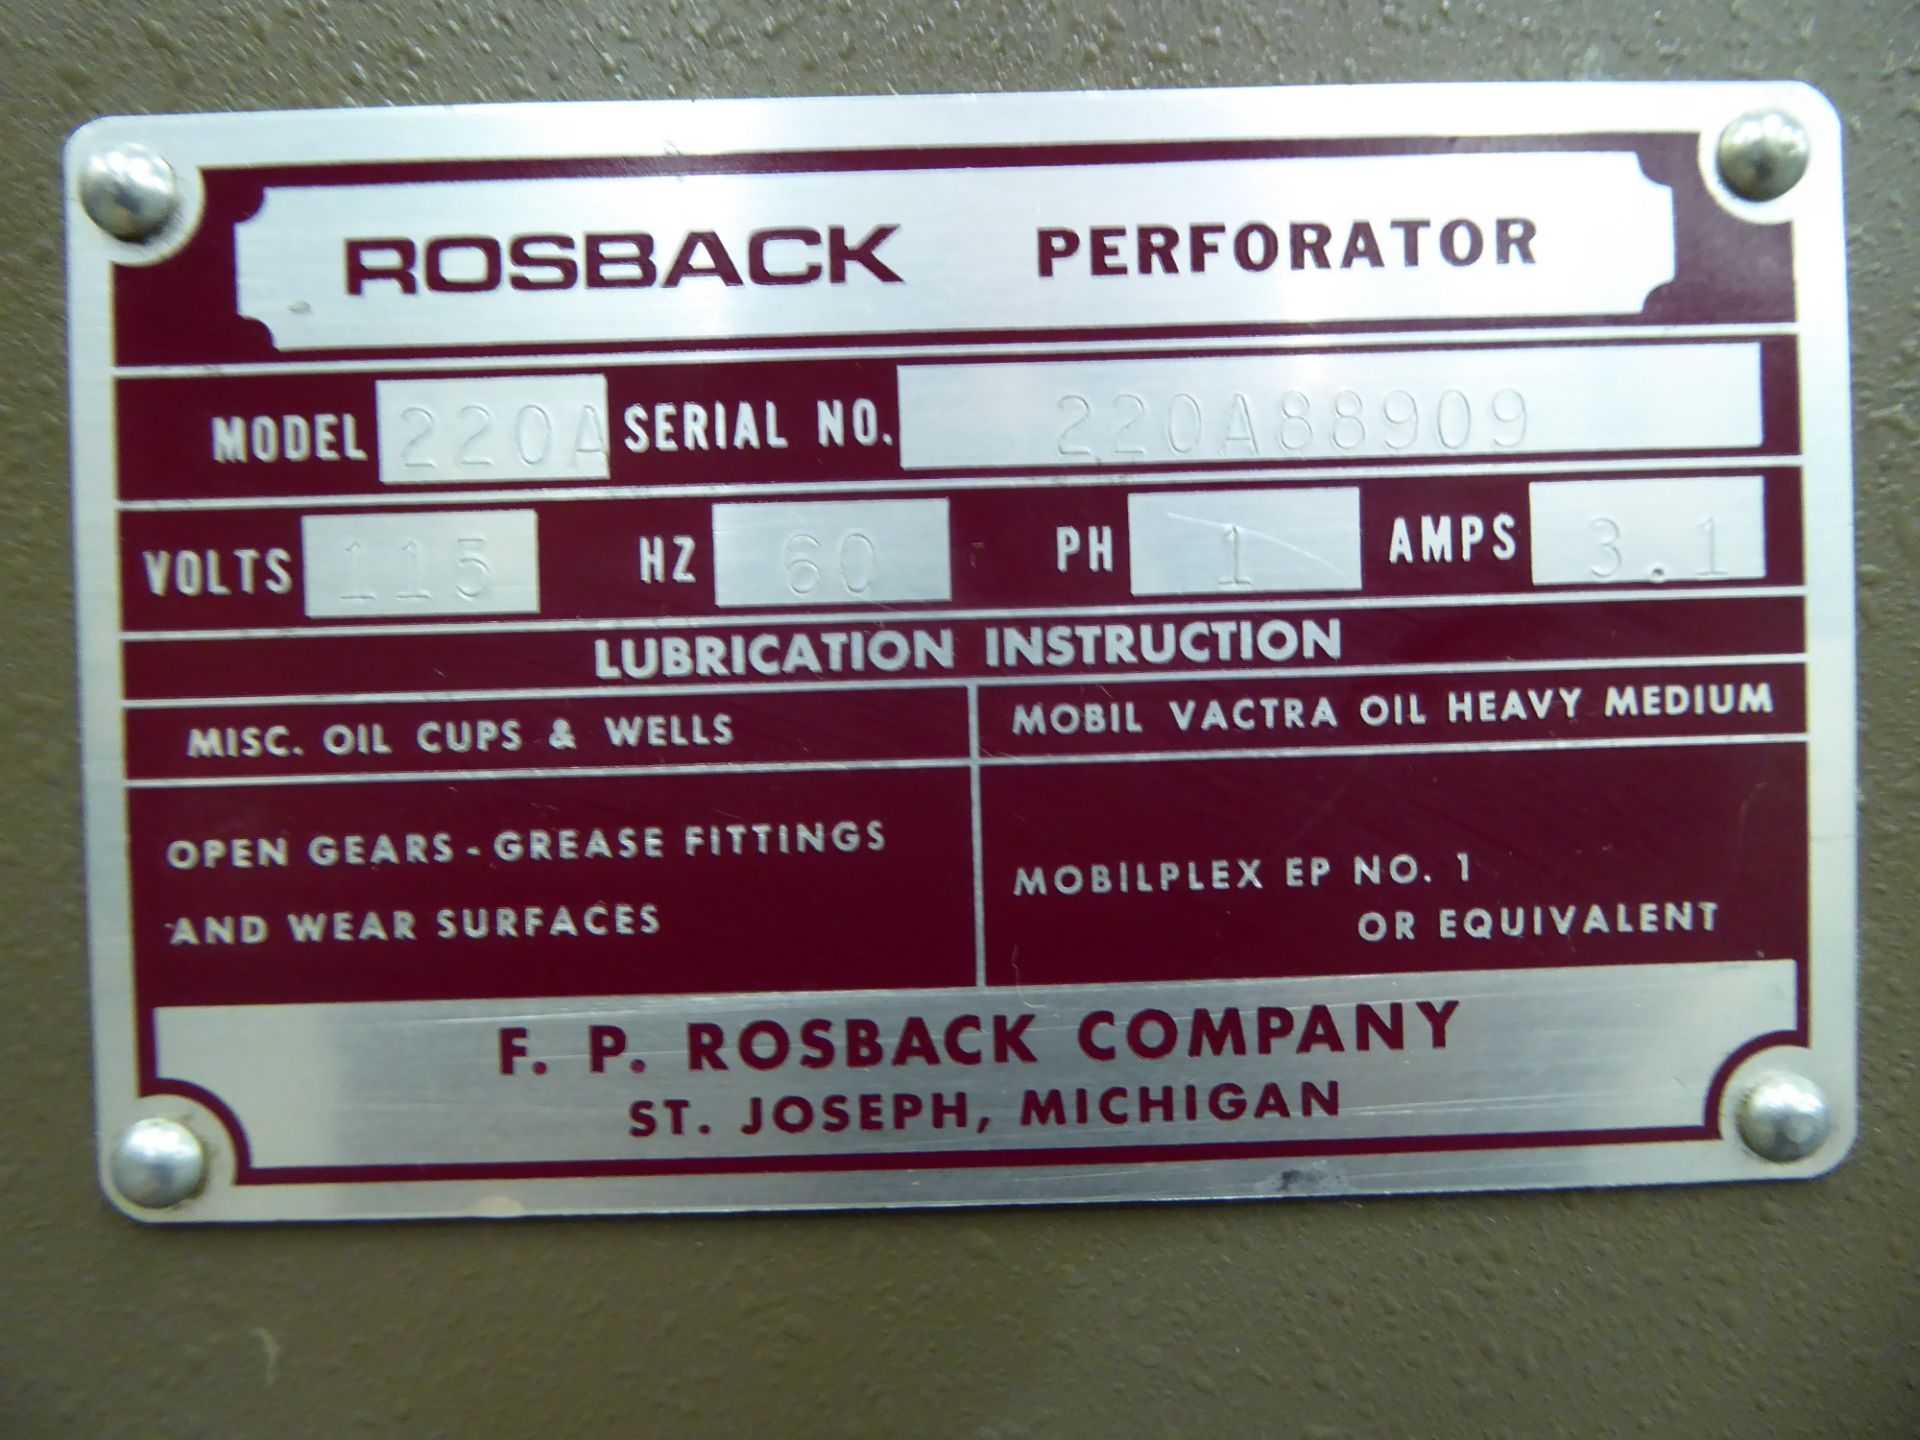 Rosback Perforator, m/n 220A, s/n 88909 - Image 4 of 4